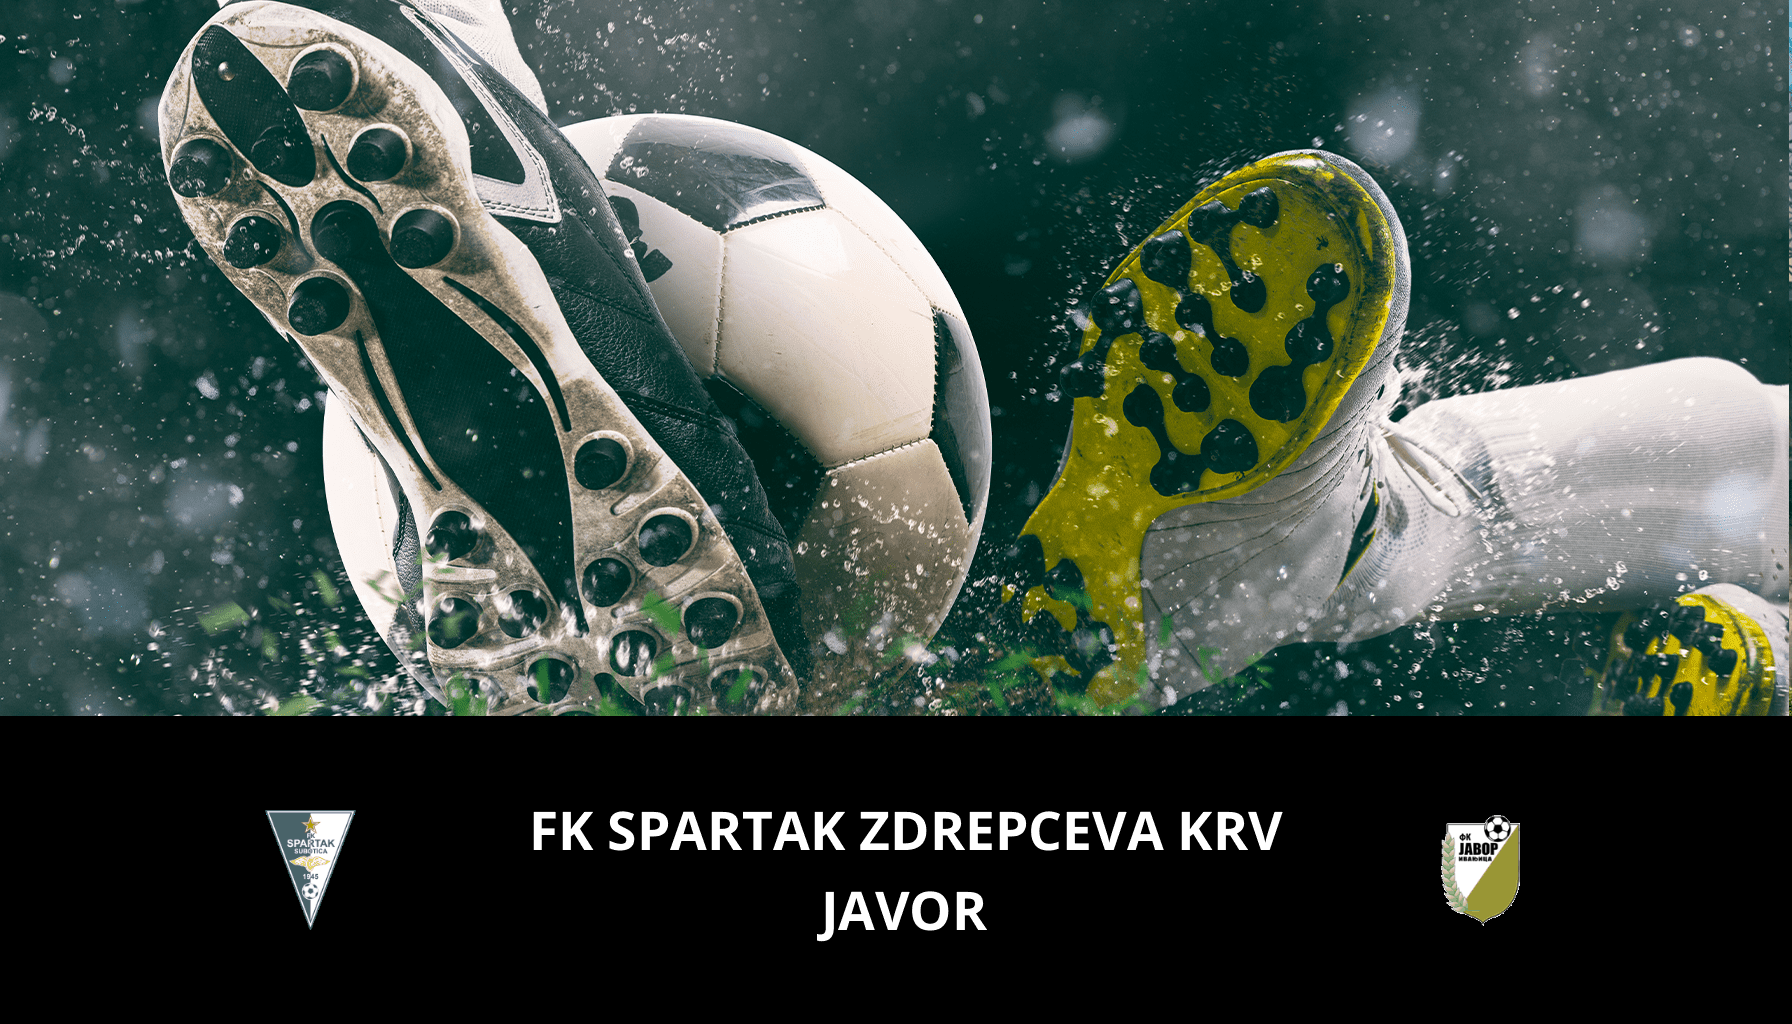 Previsione per FK Spartak Zdrepceva KRV VS Javor il 15/04/2024 Analysis of the match